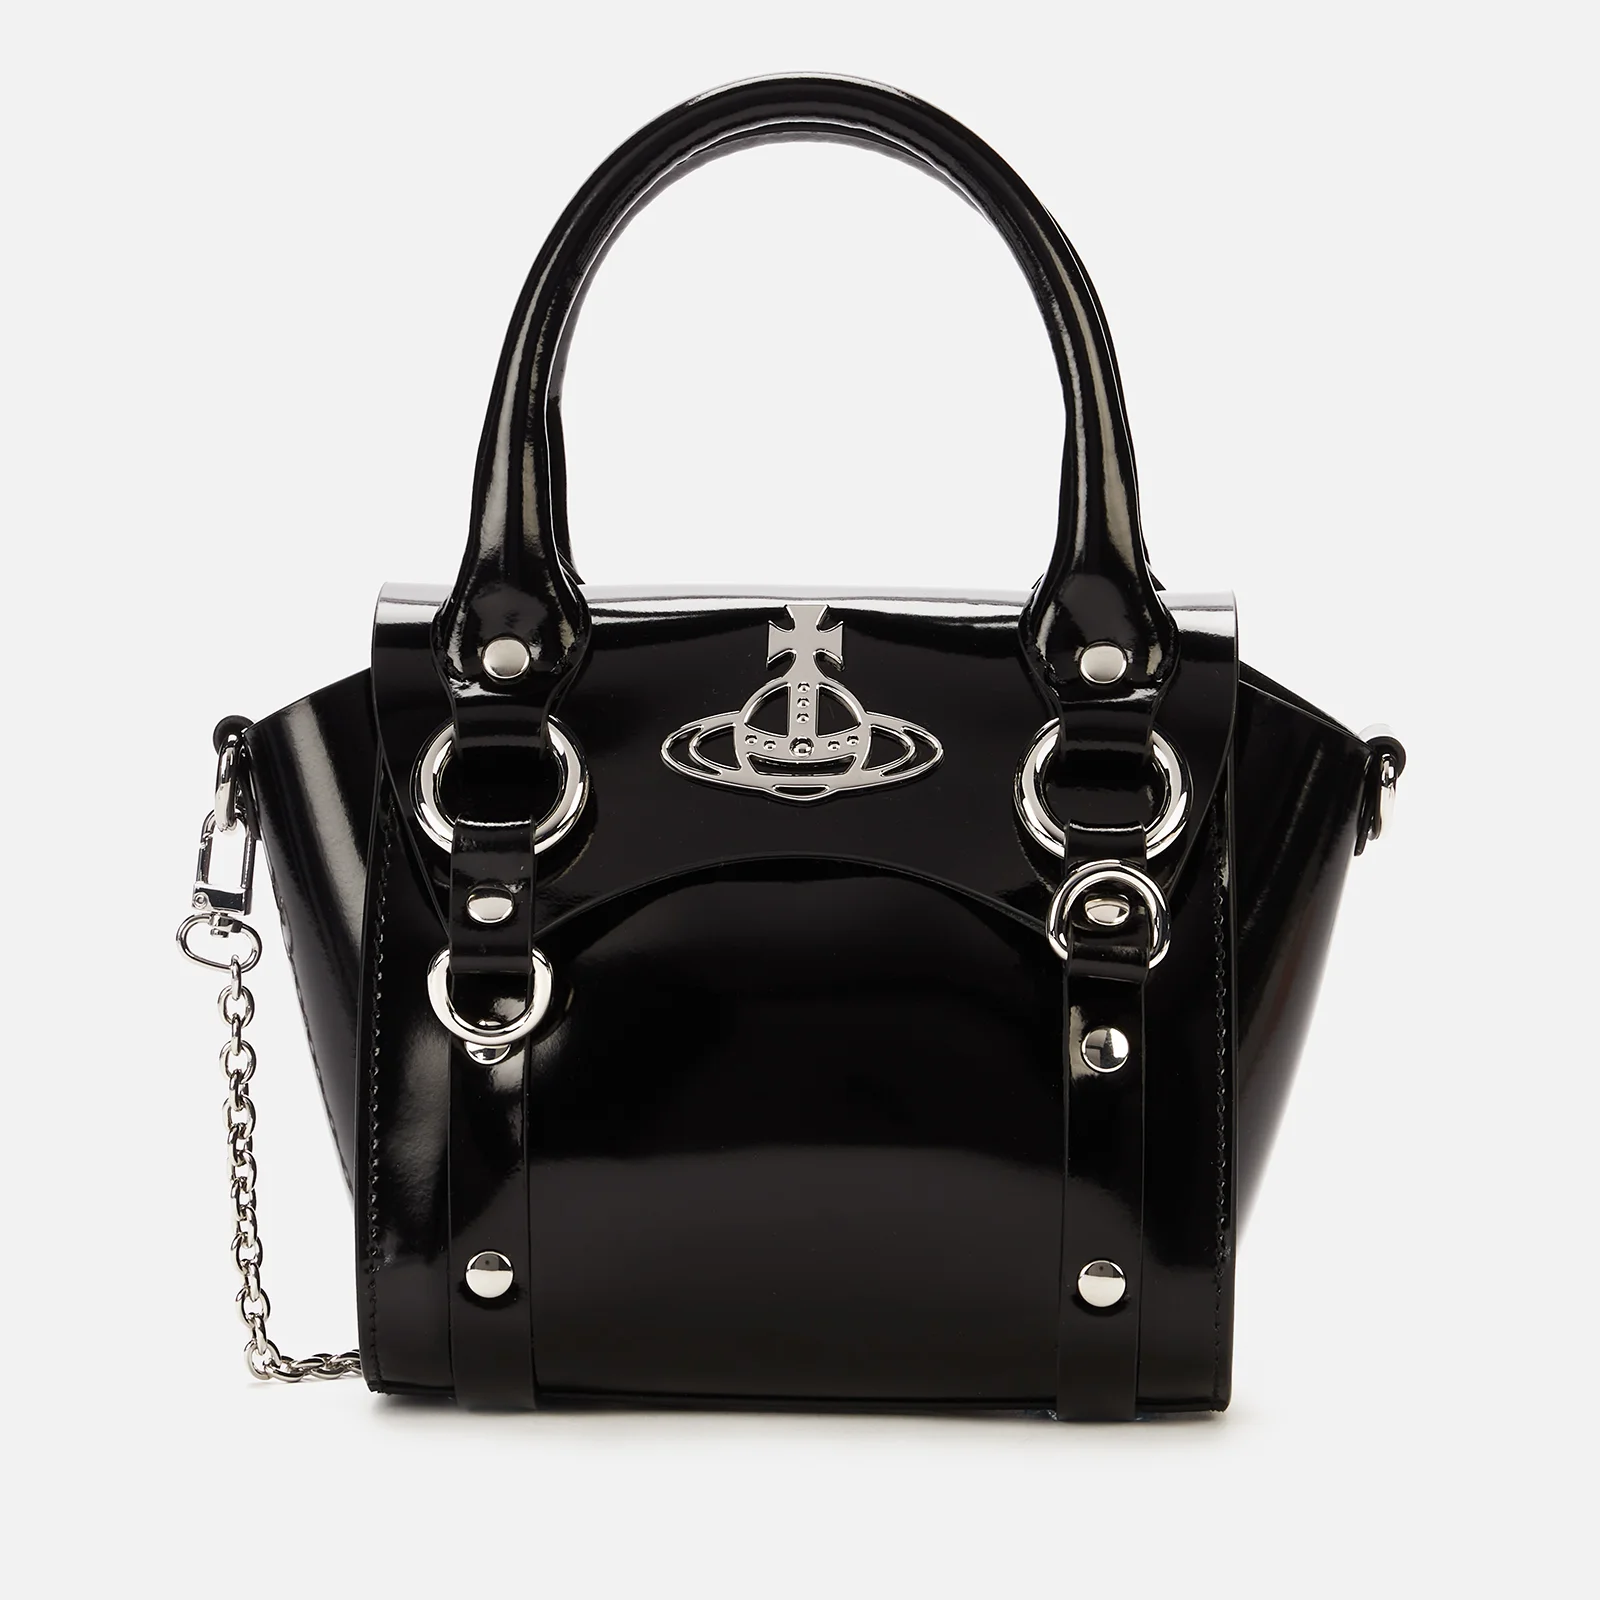 Vivienne Westwood Women's Betty Mini Handbag With Chain - Black Image 1